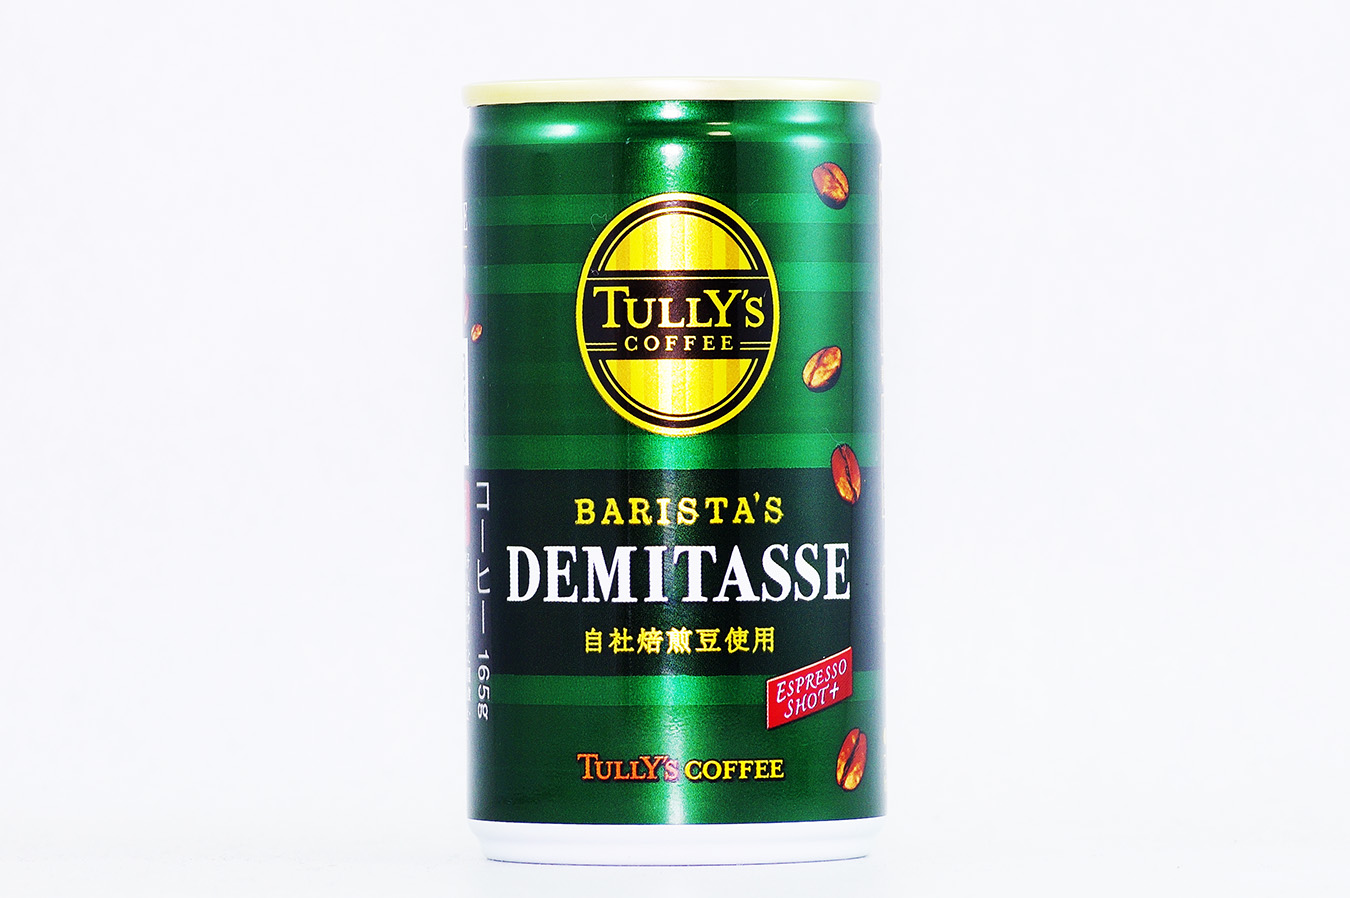 TULLY'S COFFEE BARISTA'S DEMITASSE 2016年10月